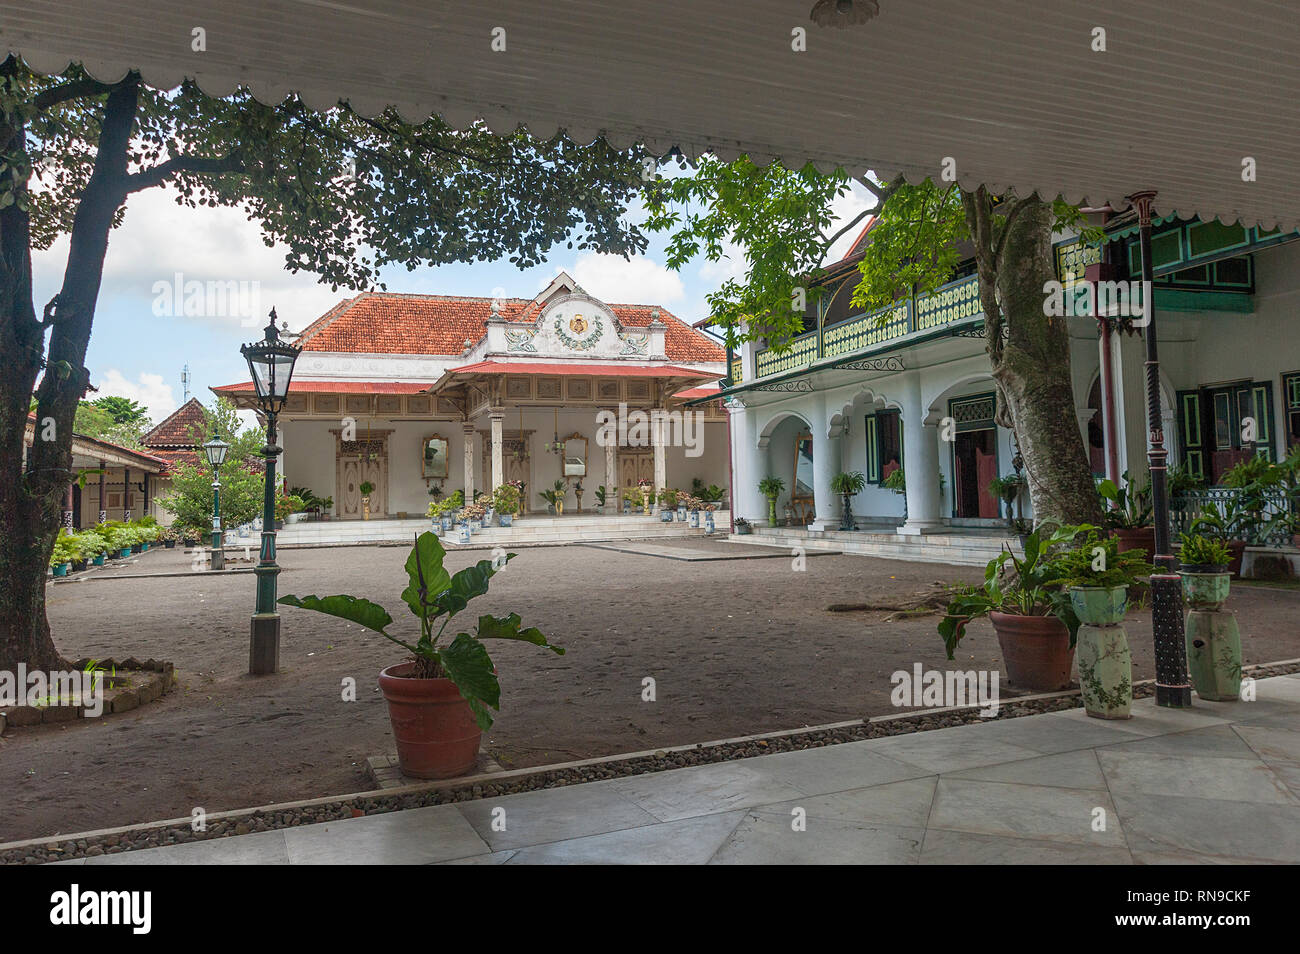 Yogyakarta Indonesia - Aug 1, 2016 : View inside Kraton Sultan Palace, Yogyakarta which is home to the last Sultanate in Special Region of Yogyakarta  Stock Photo